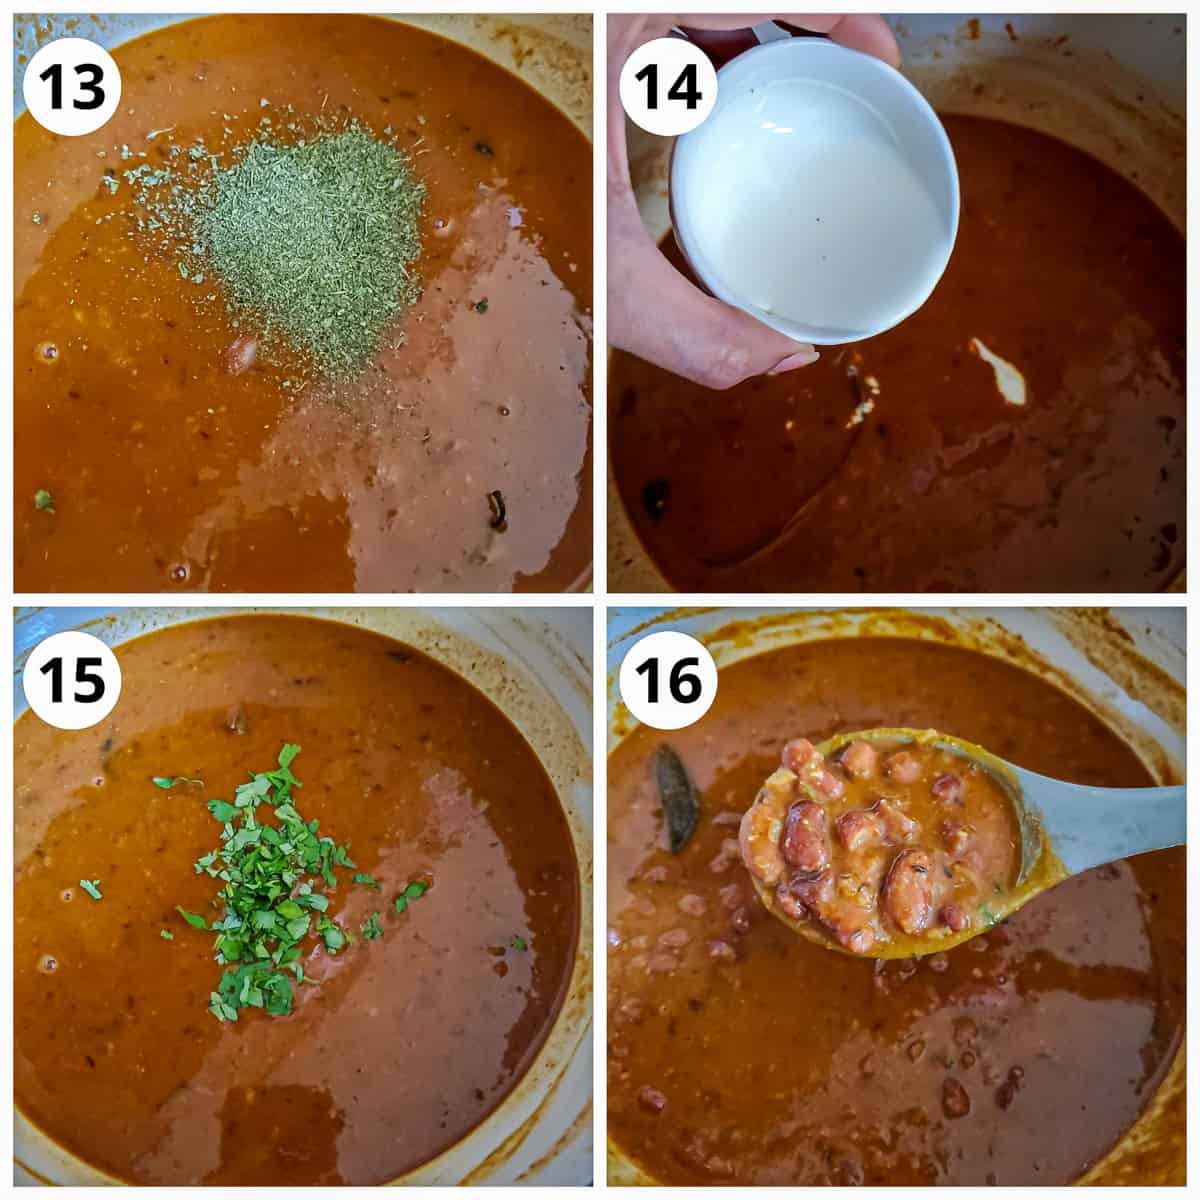 Steps showing adding kasuri methi, cream, cilantro